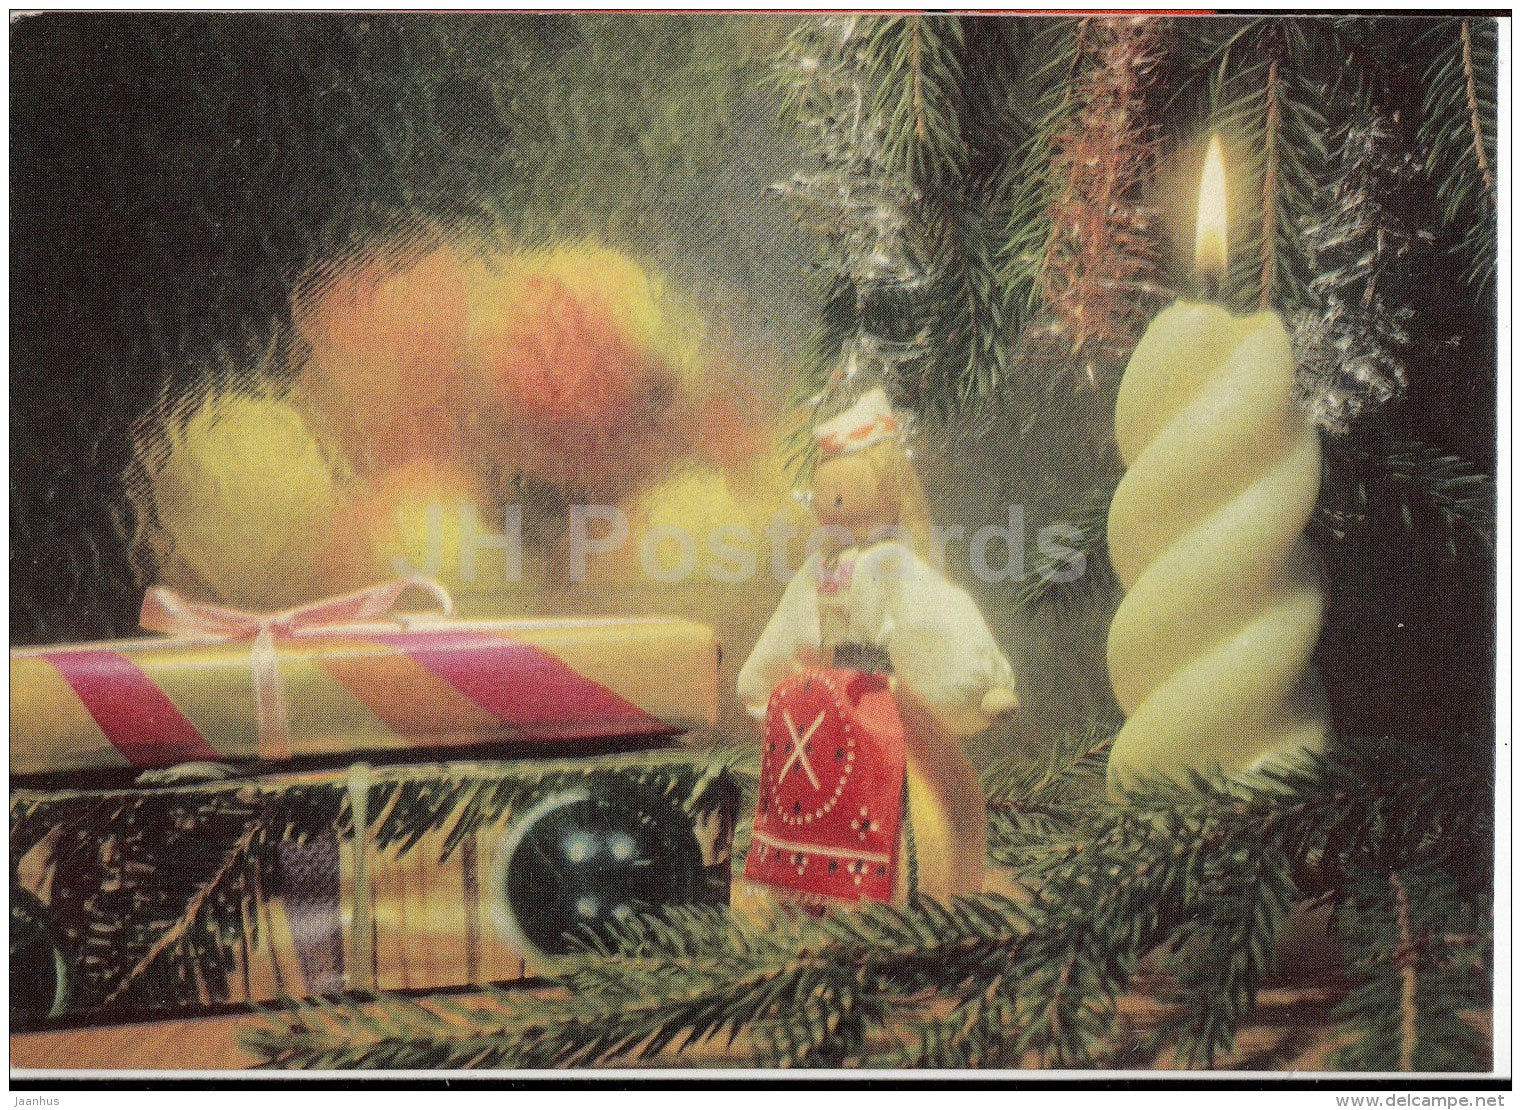 New Year Greeting card - doll in estonian folk costumes - gifts - 1971 - Estonia USSR - unused - JH Postcards